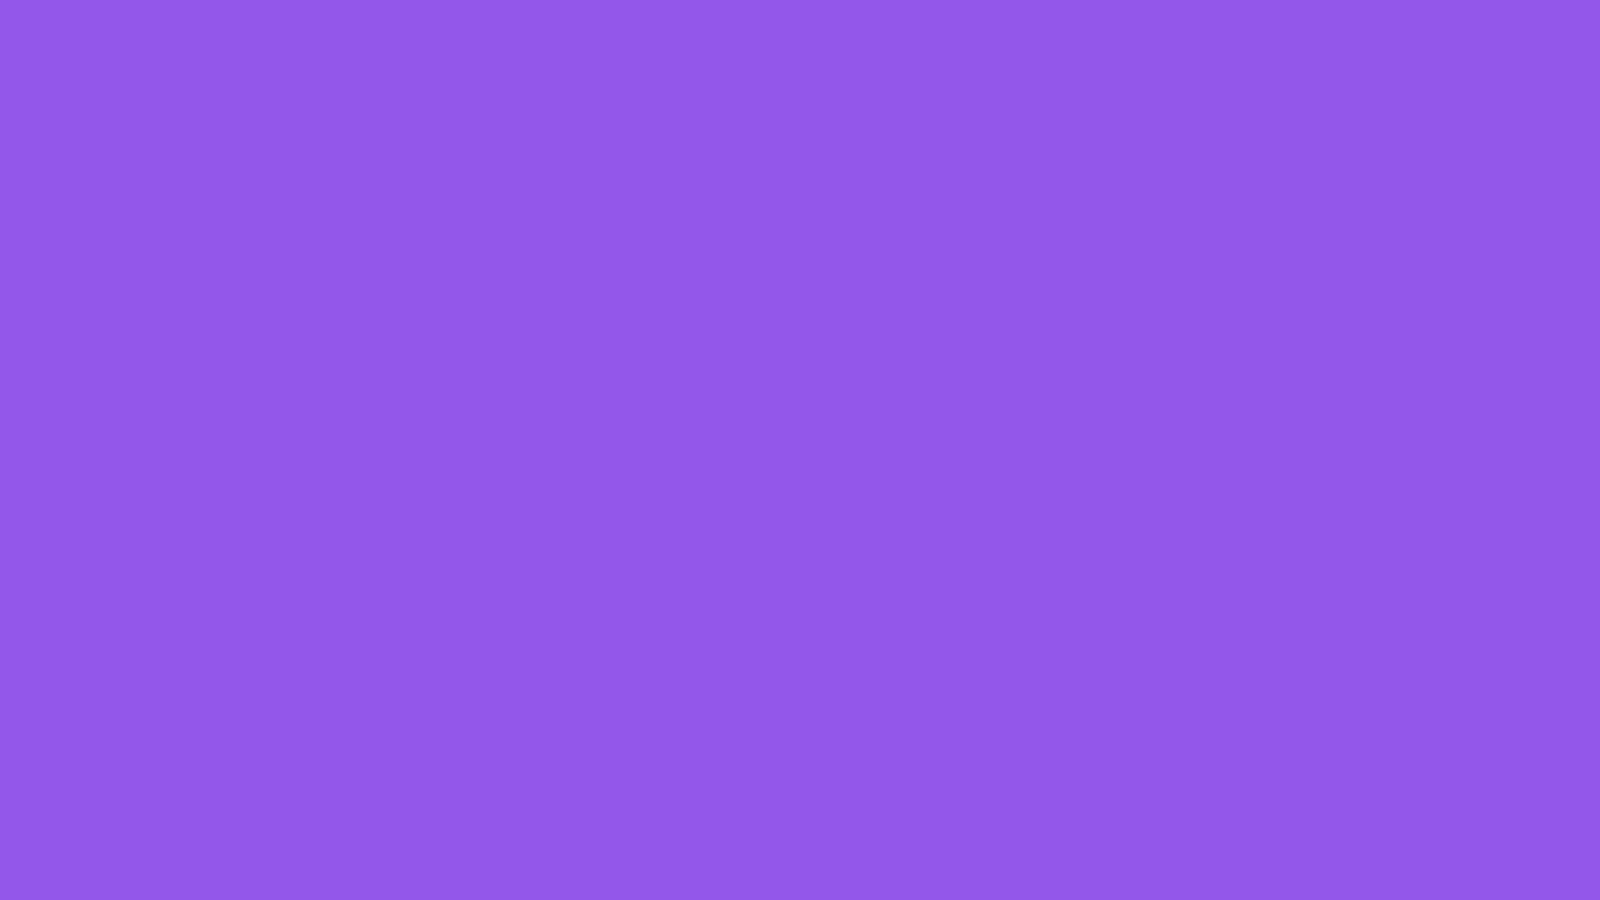 Solid Purple Plain Zoom Background